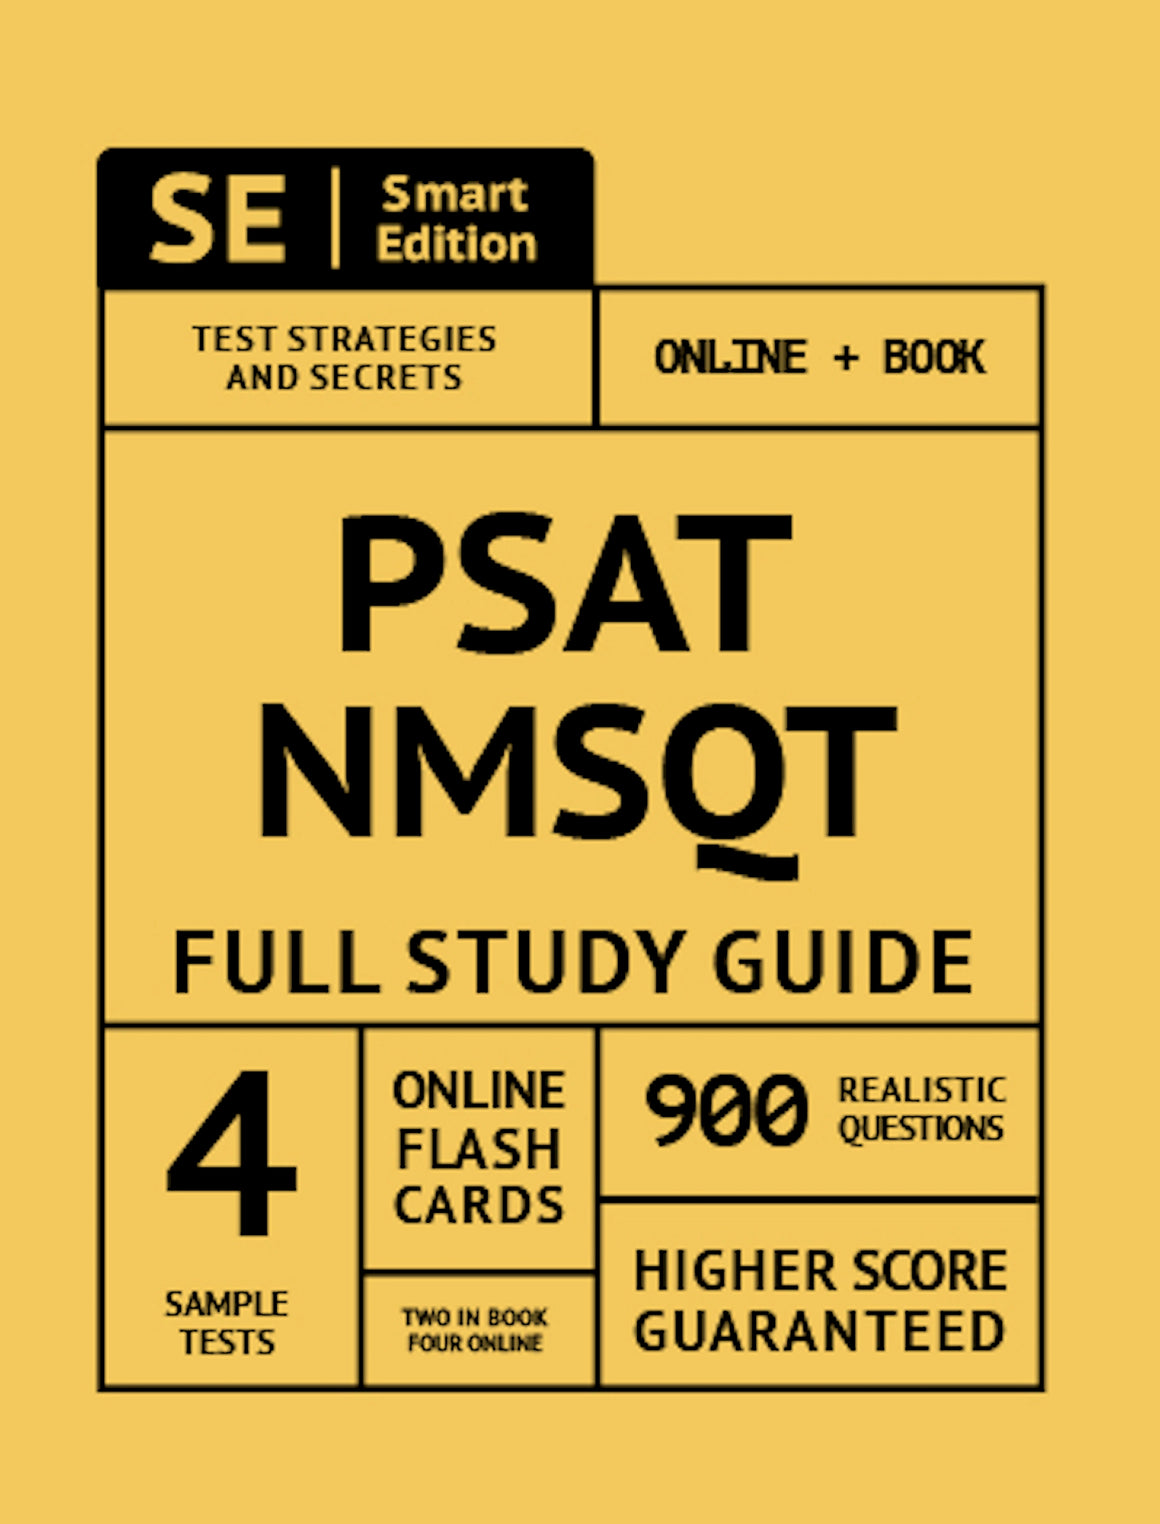 PSAT/NMSQT Full Study Guide